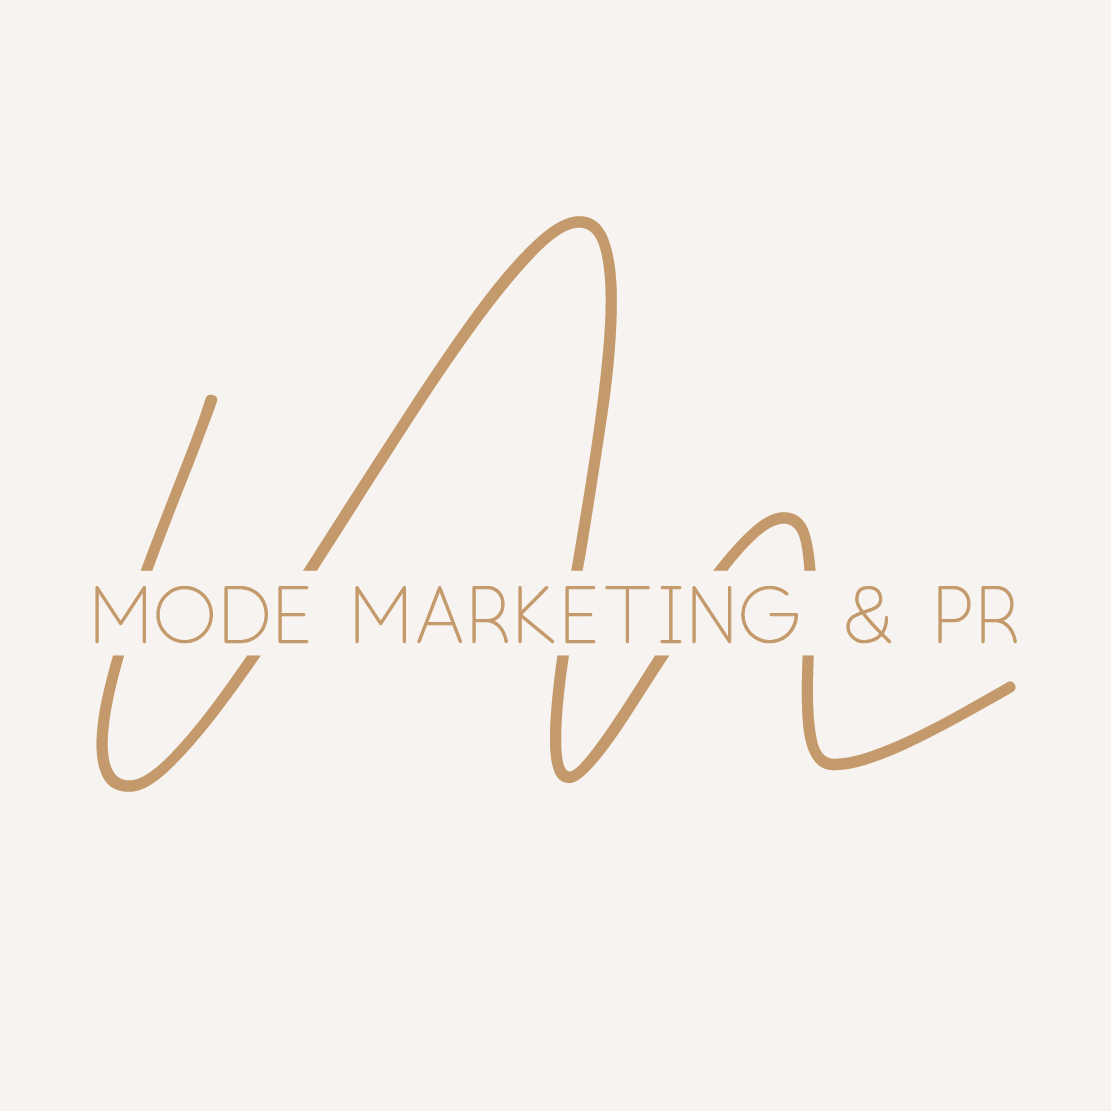 MODE Marketing & PR